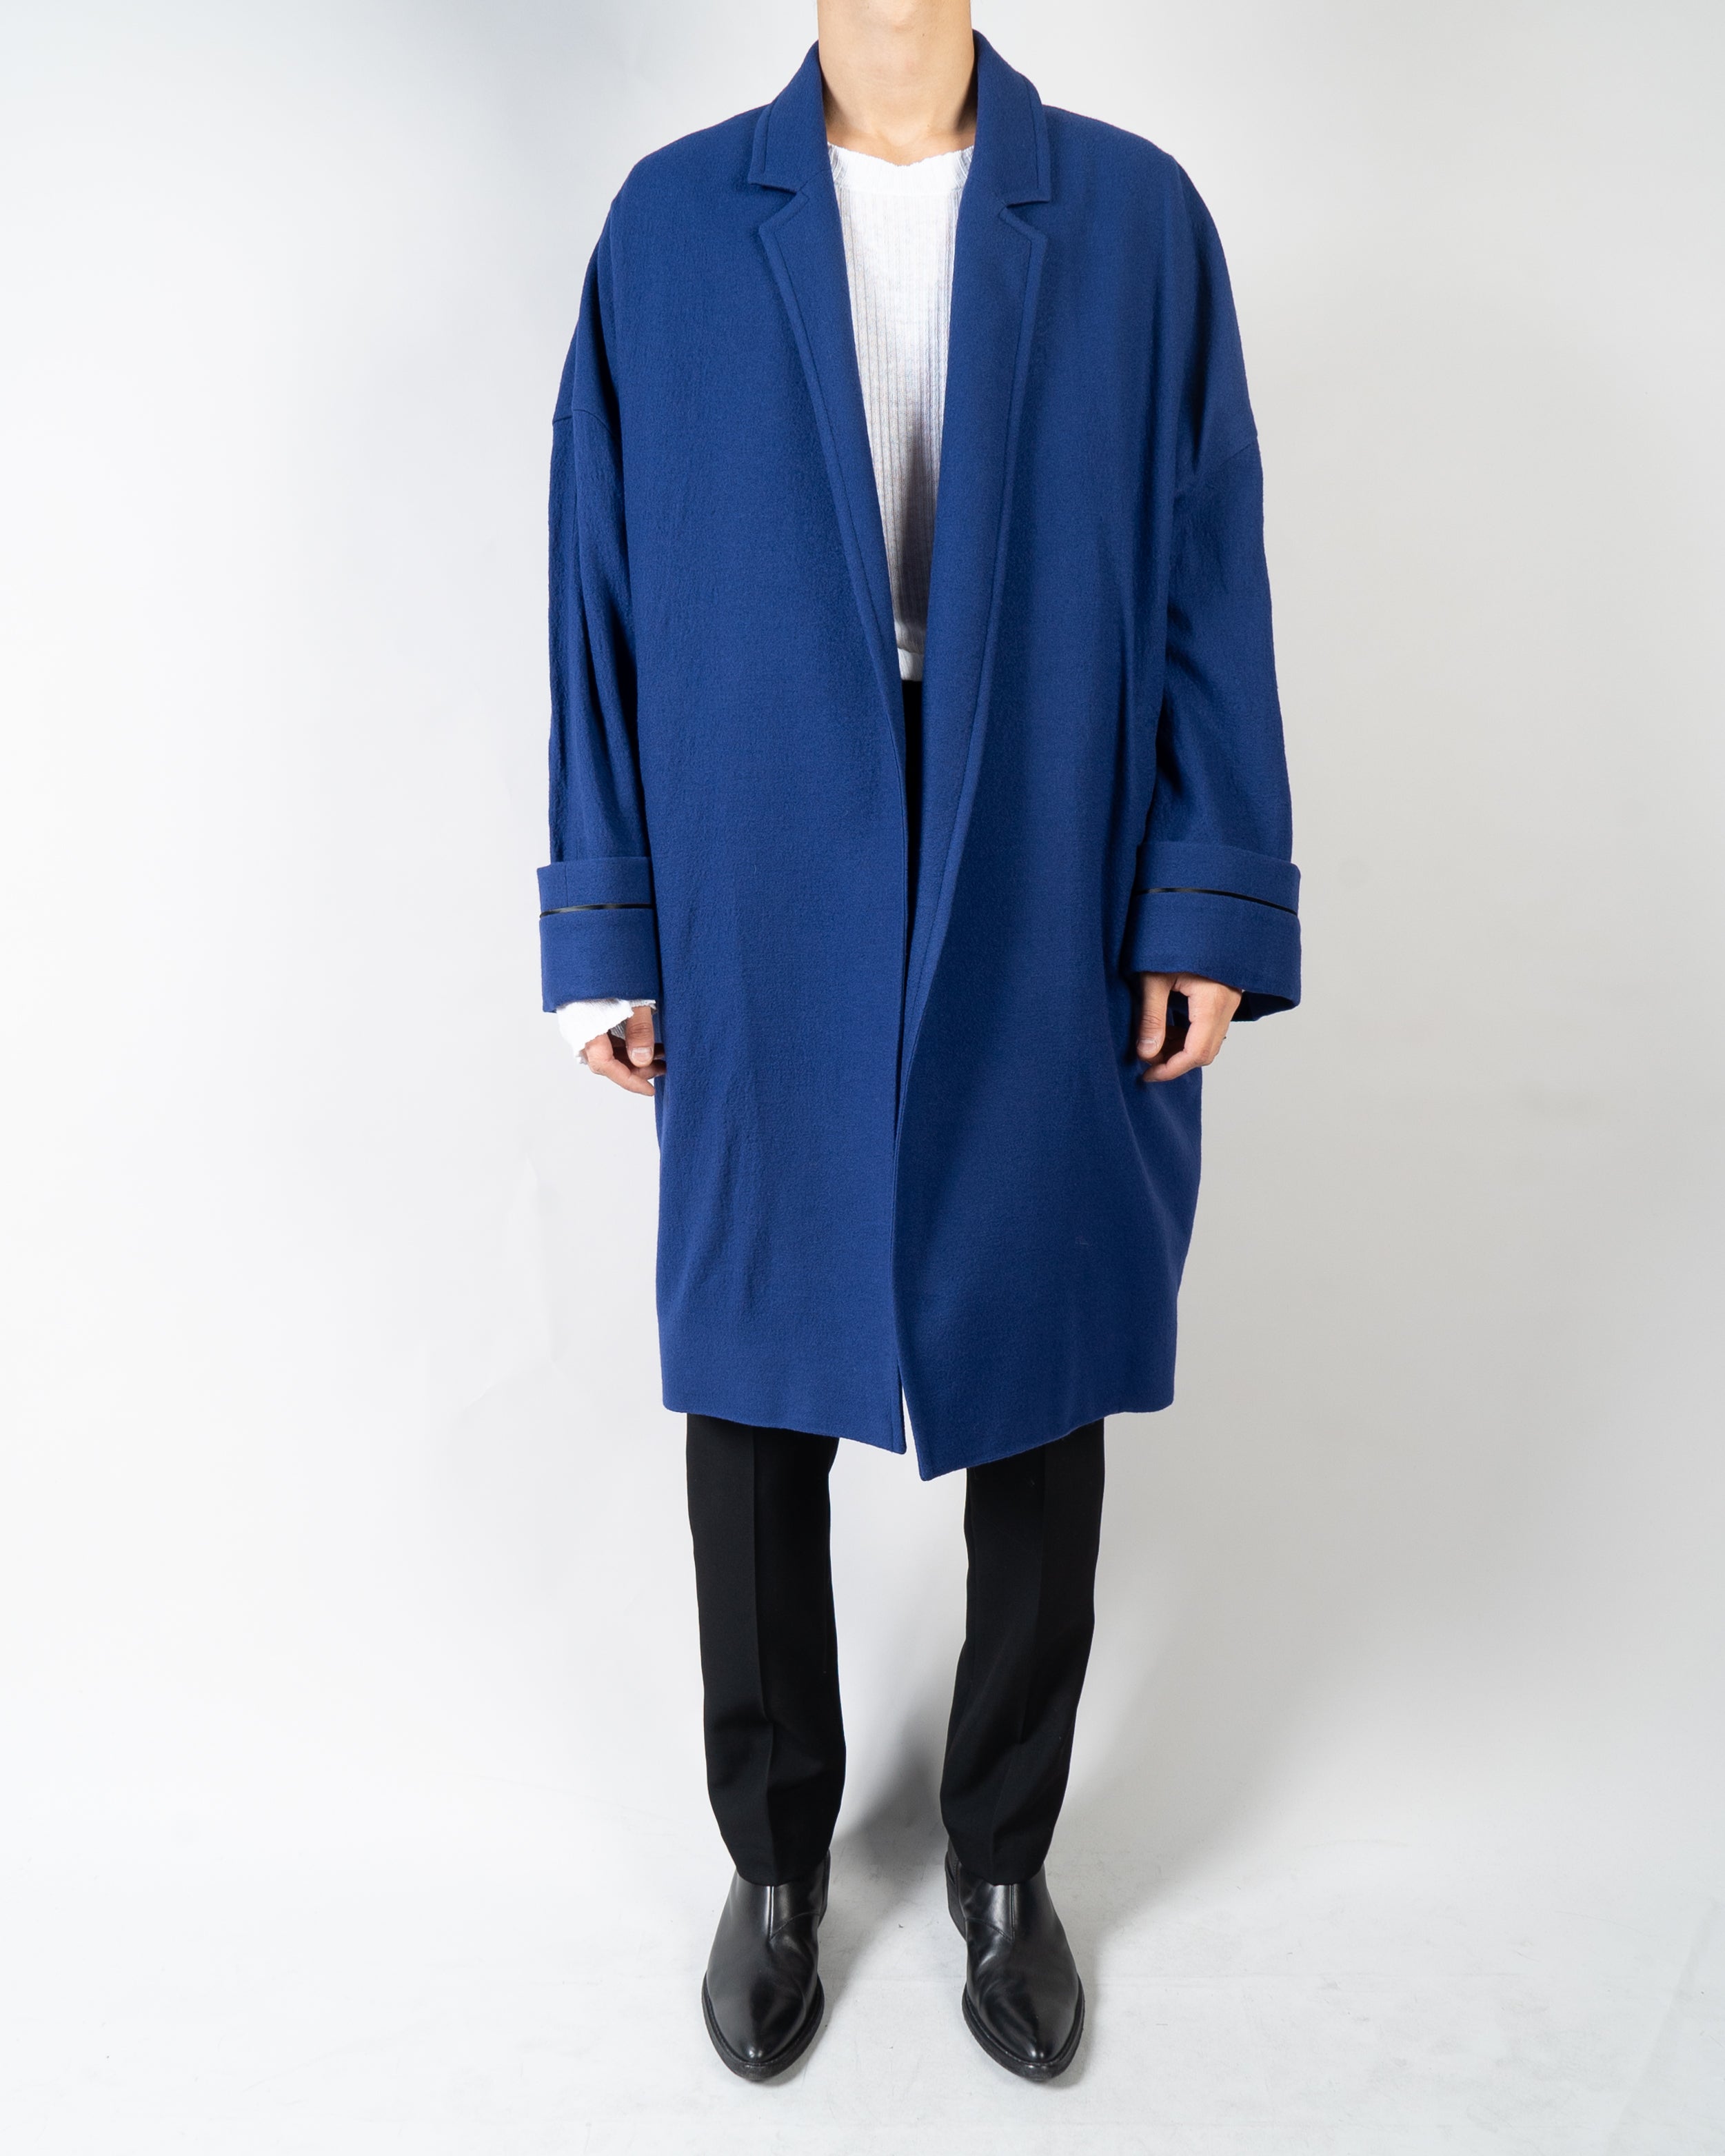 FW19 Oversized Sargent Blue Wool Coat